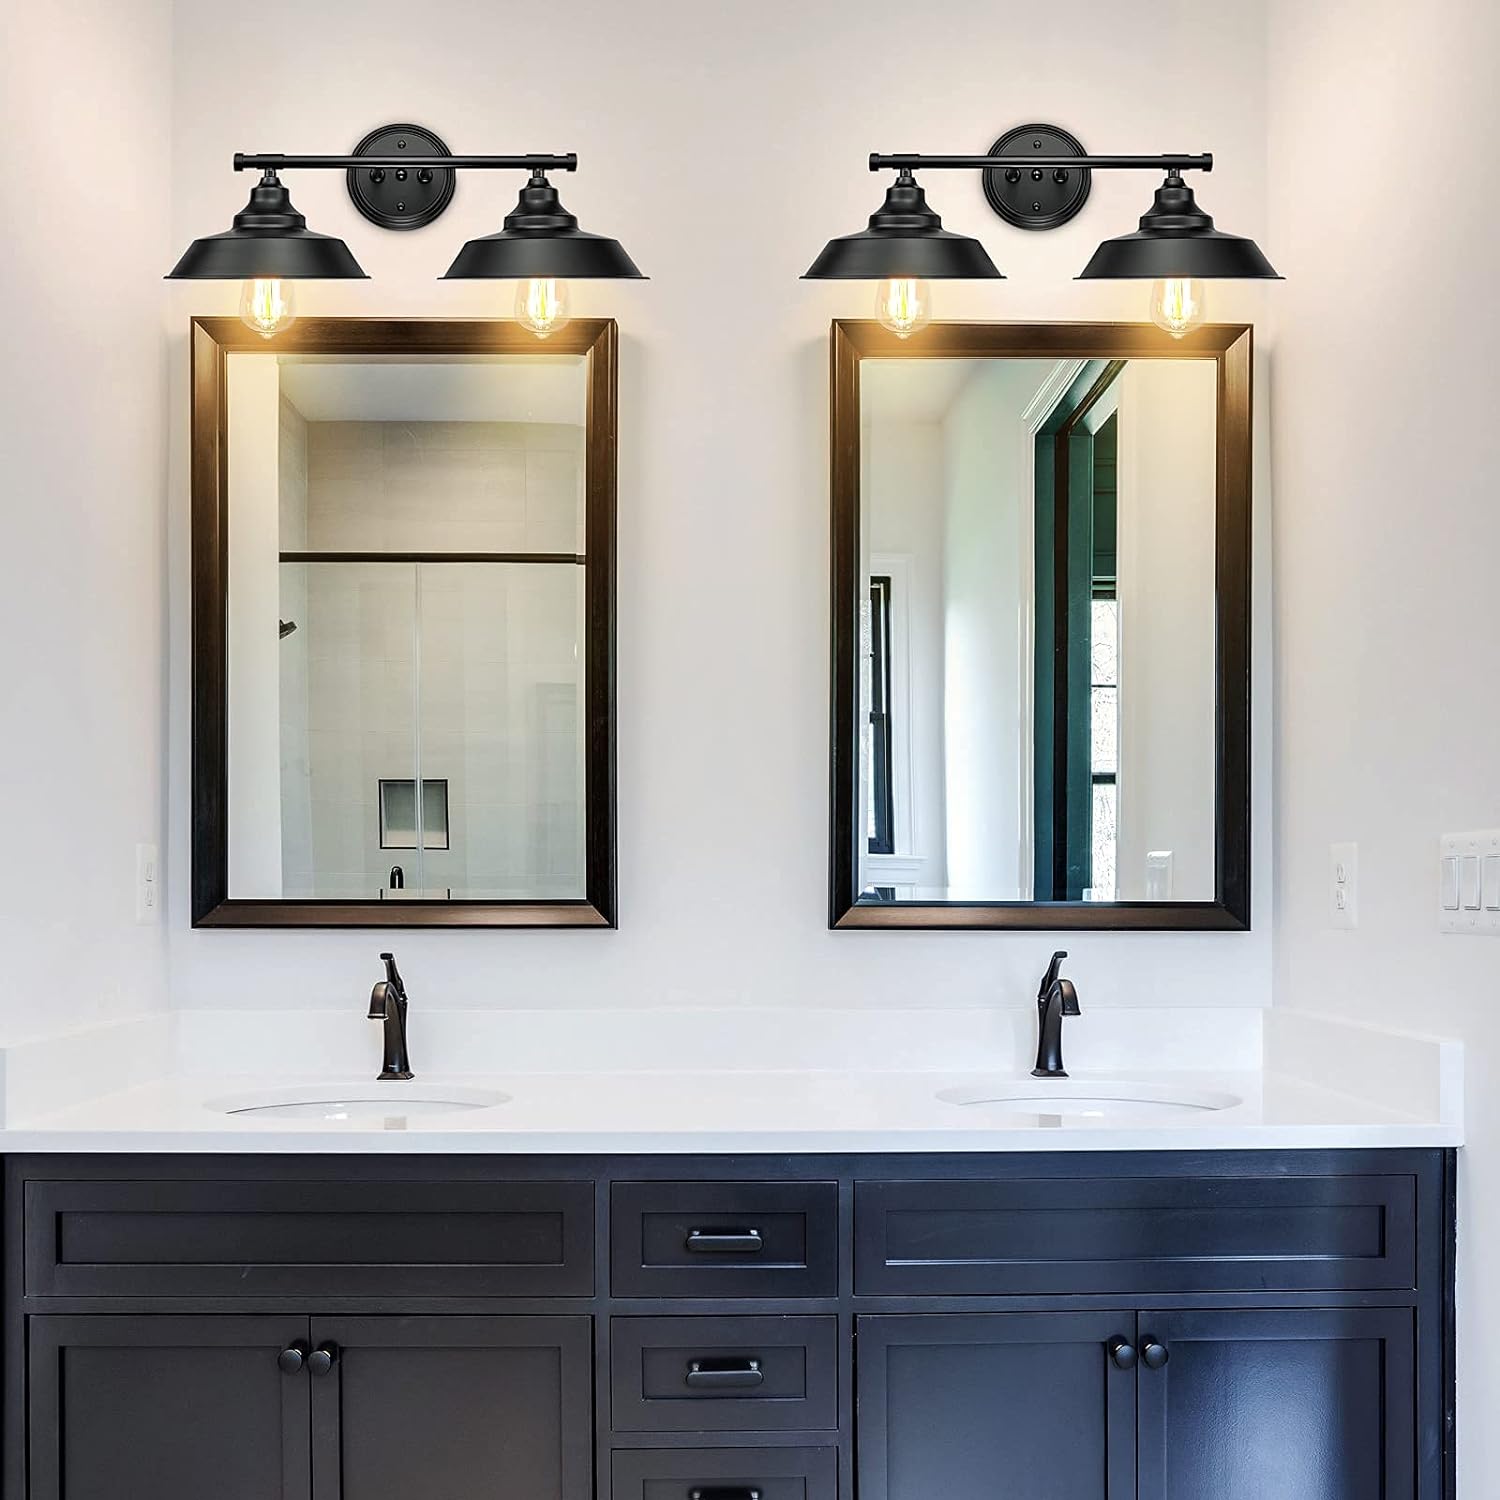 GZBEINI Black Vanity Light Fixtures for Bathroom, Rustic Bathroom Light Fixtures Over Mirror Vintage Mid Century Wall Sconces Rustic St